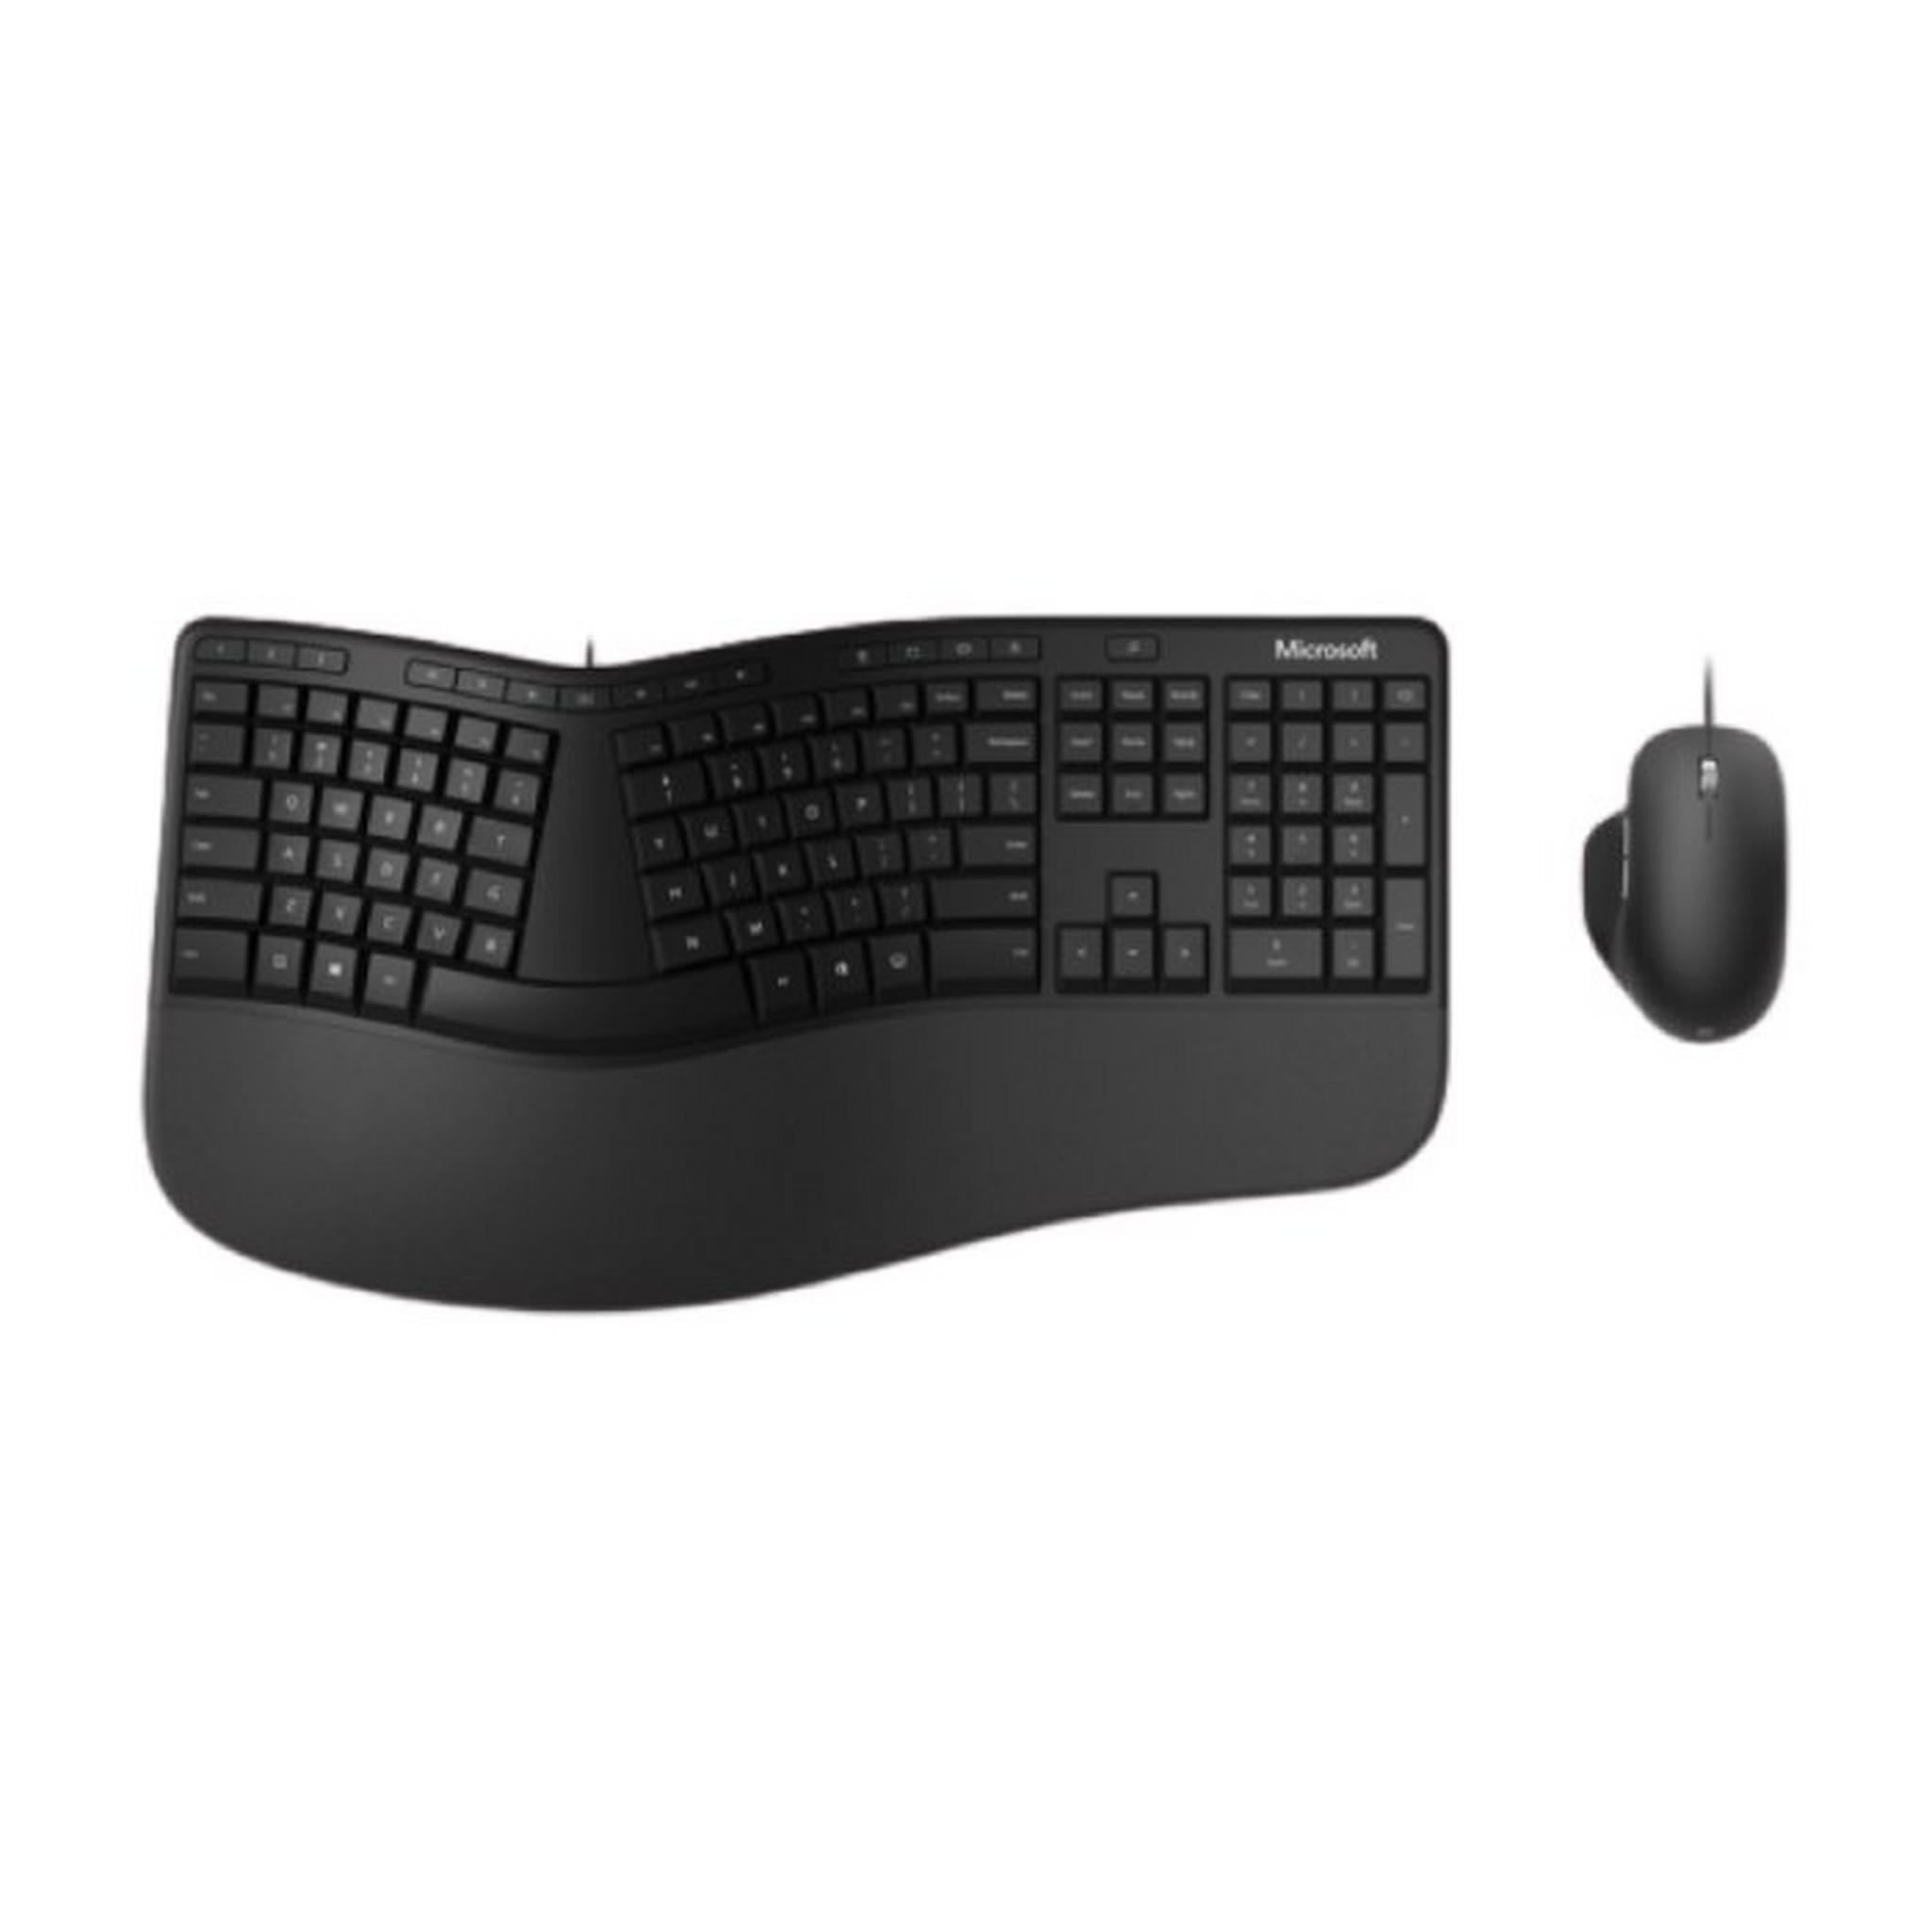 Microsoft Ergonomic Desktop Wired Keyboard and Mouse - Black